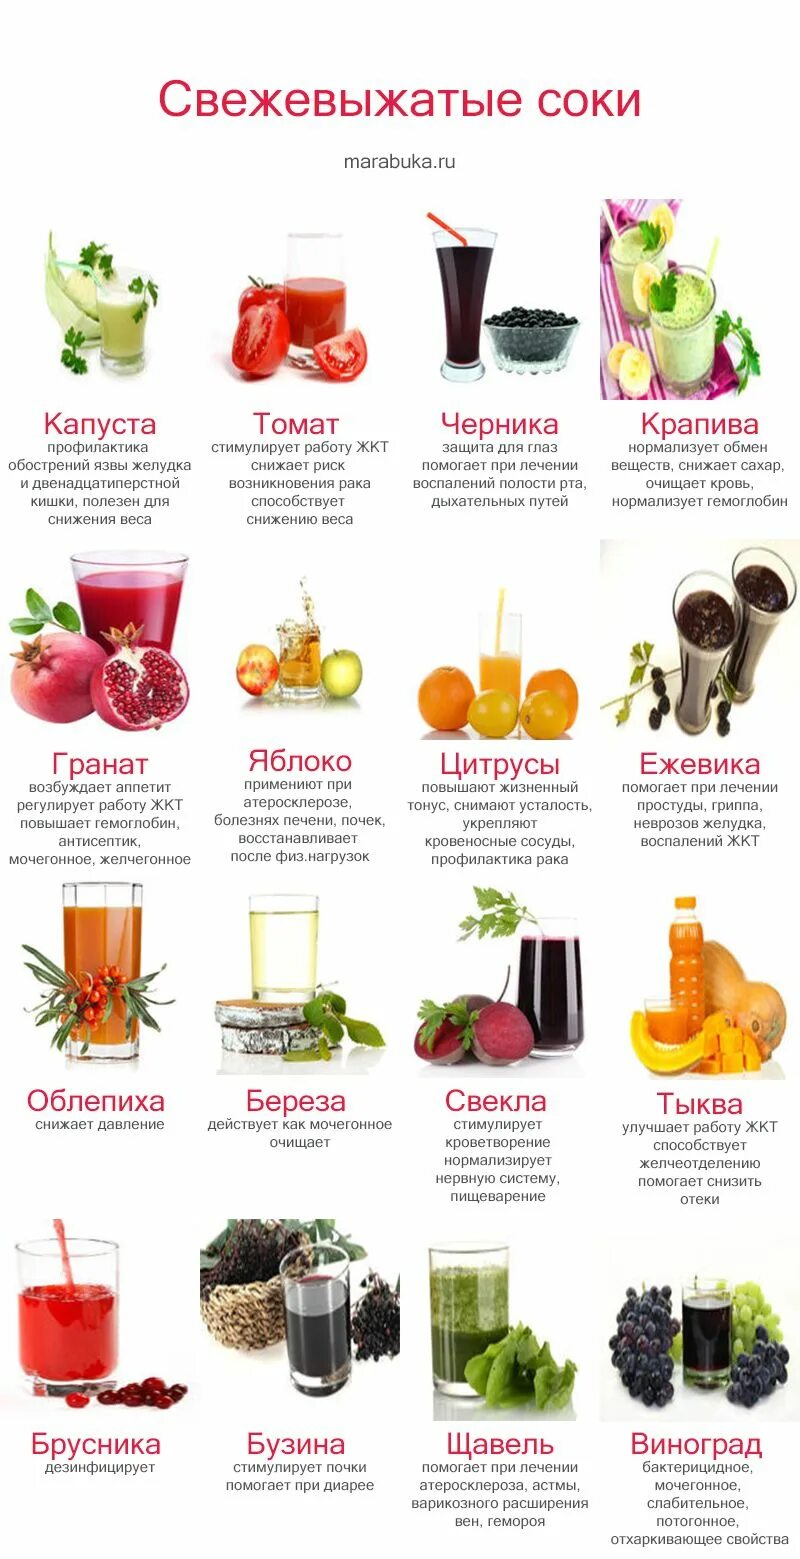 Рецепты свежевыжатых соков. Полезные свежевыжатые соки. Сочетание свежевыжатых соков. Сочетание овощей и фруктов для сока.